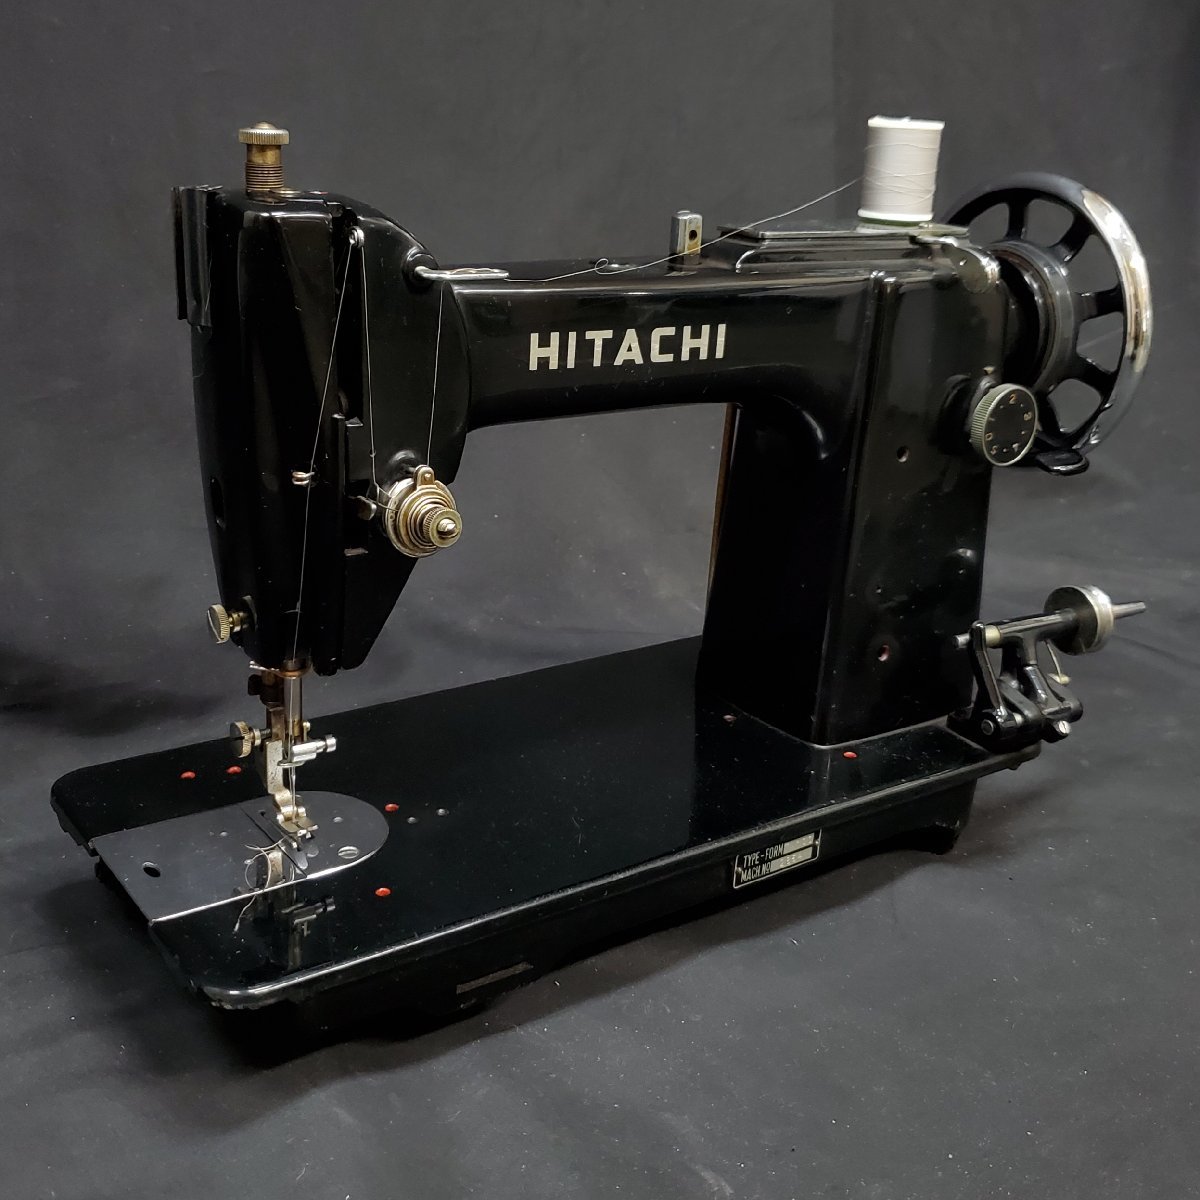 [. warehouse ] that time thing Showa Retro antique HITACHI Hitachi Hitachi sewing machine TA100 black approximately 46.16. interior present condition goods 